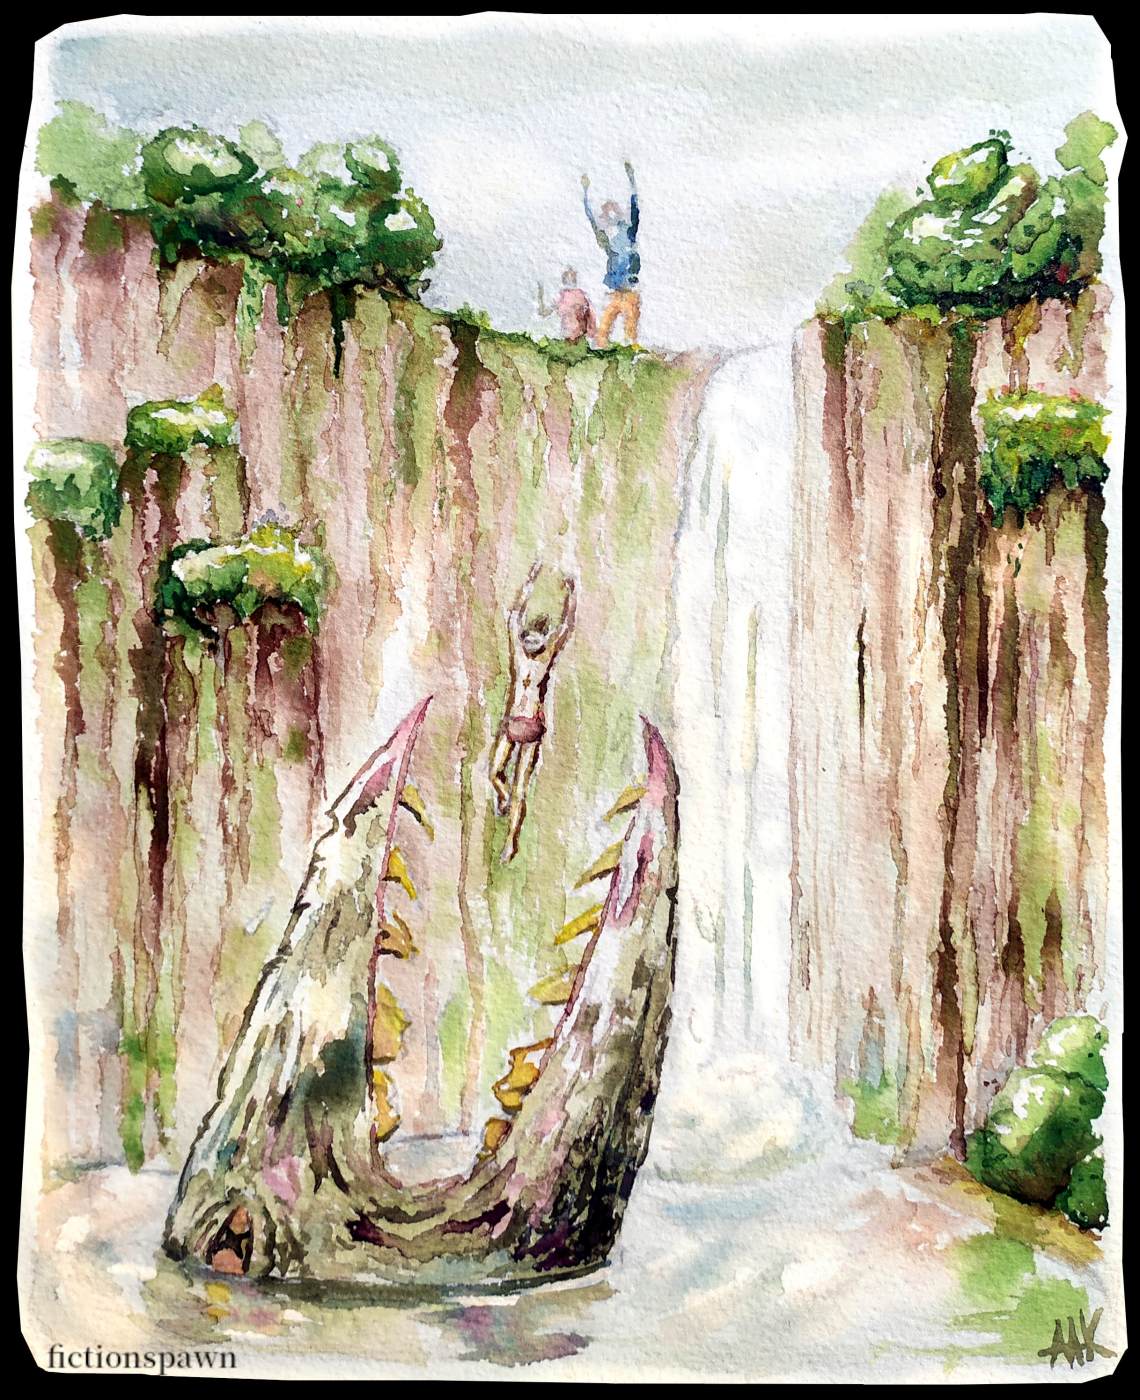 Waterfall monster Aak fictionspawn